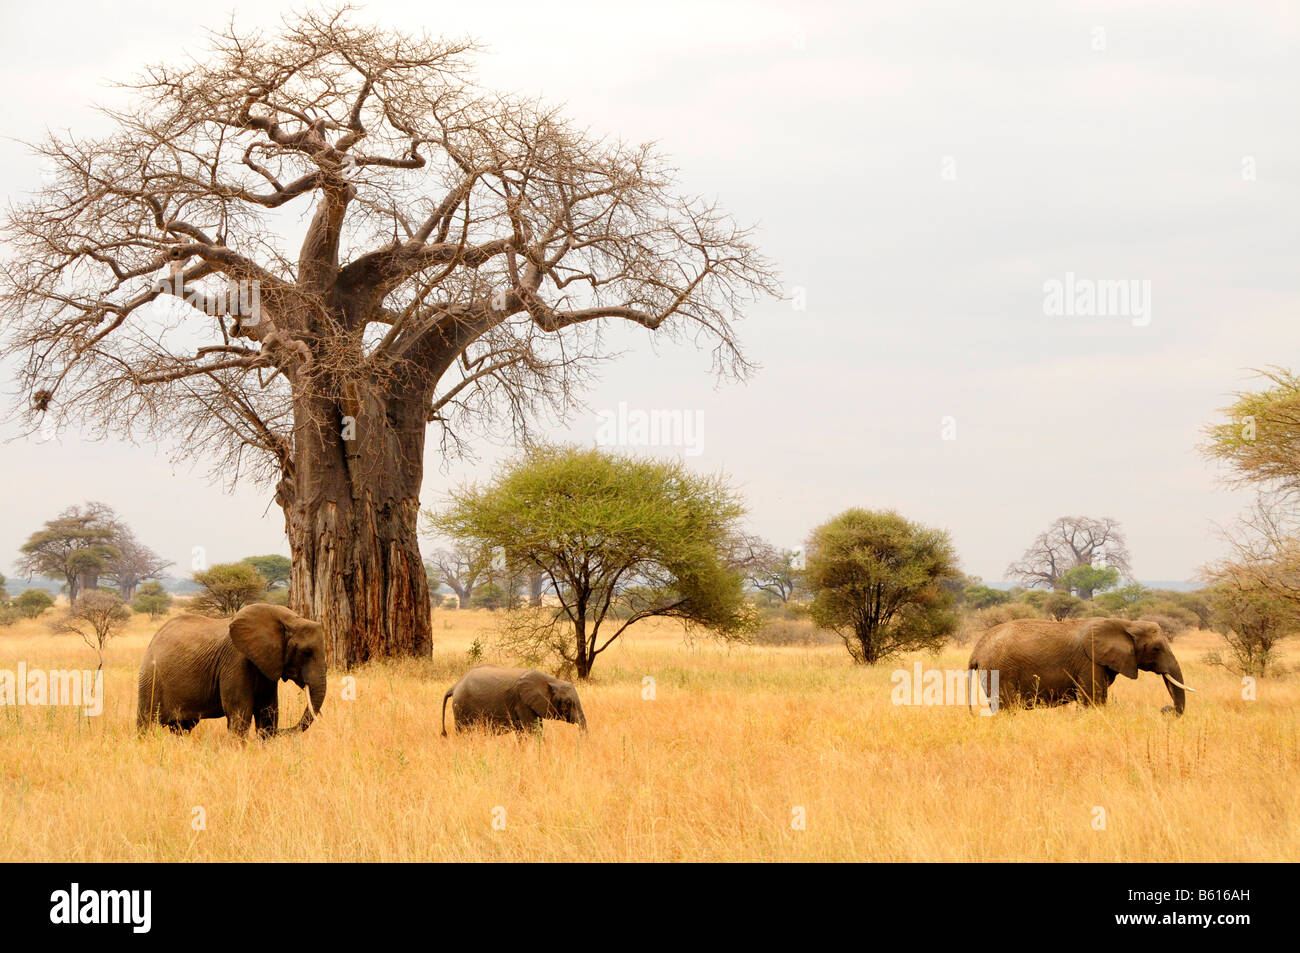 Bush Elefantes Africanos (Loxodonta africana) bajo un árbol baobab (Adansonia digitata), Tarangire-National Park, Tanzania, África Foto de stock